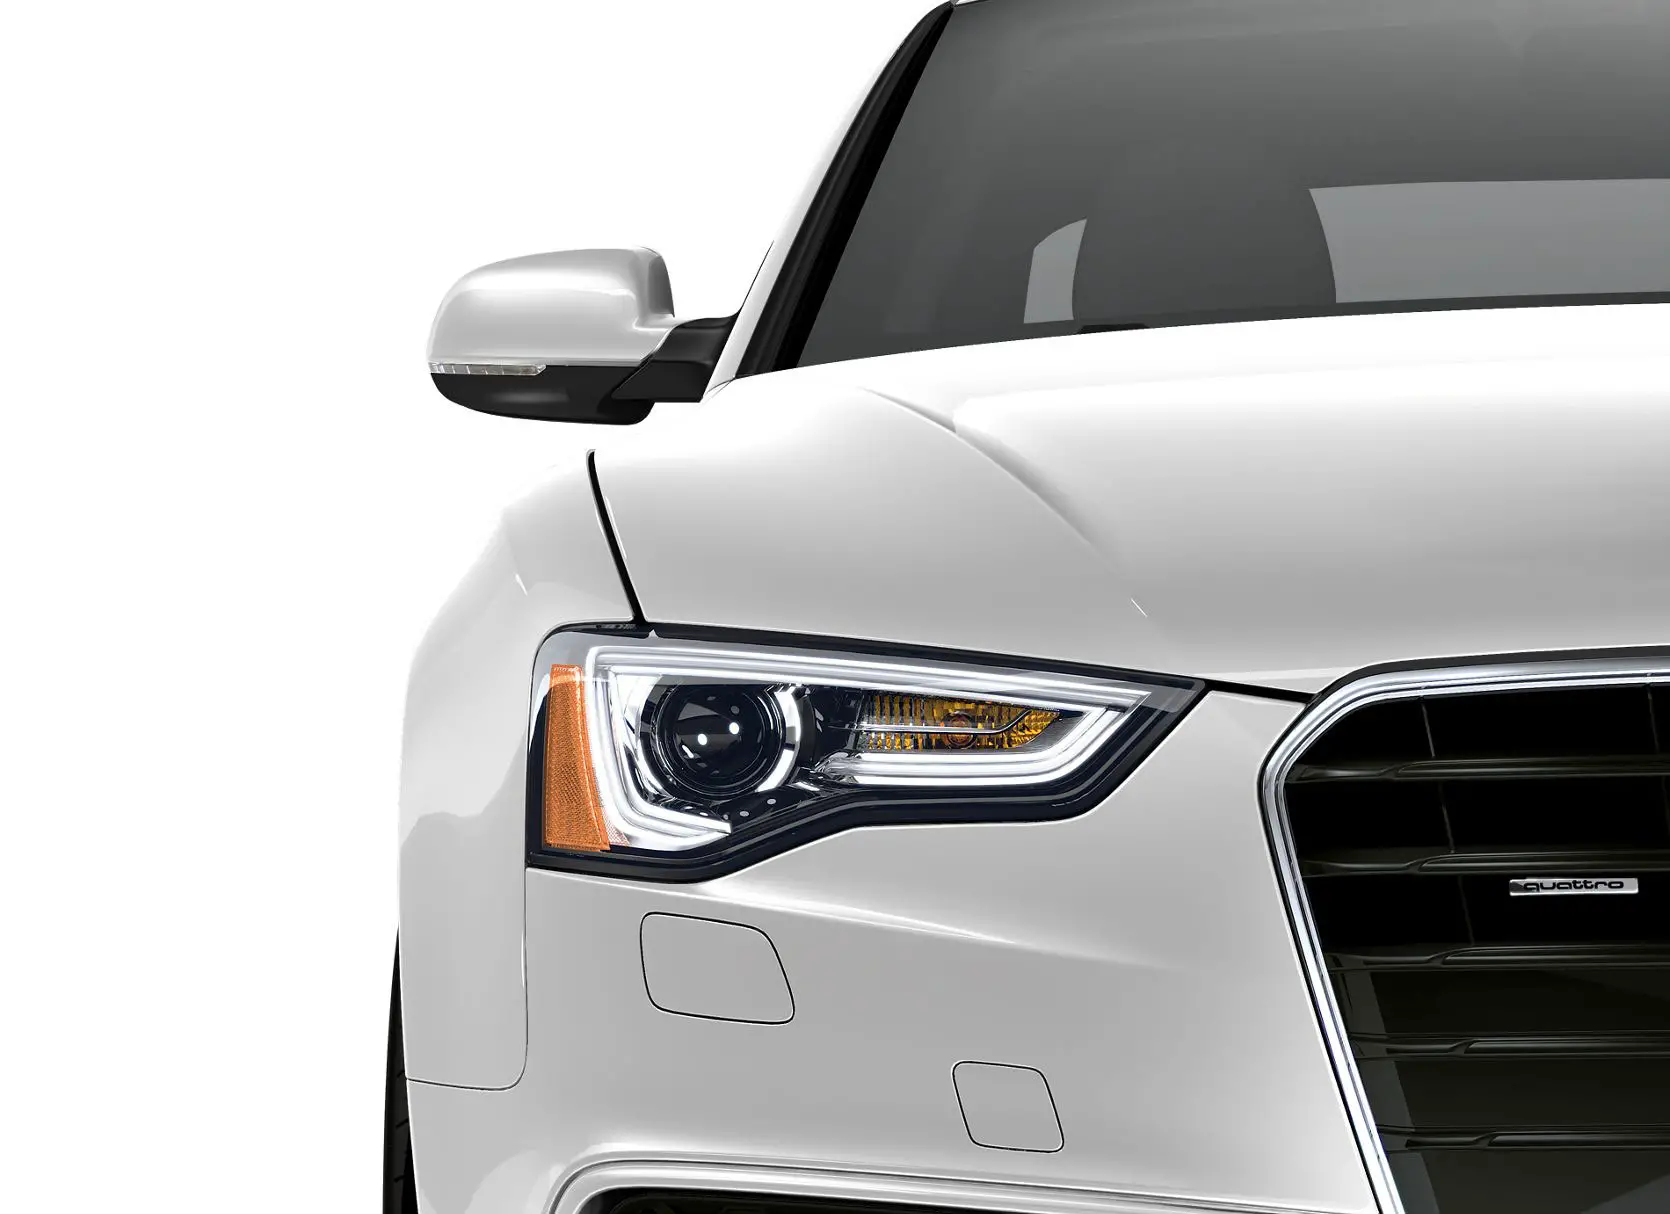 Audi A5 Premium Coupe front view